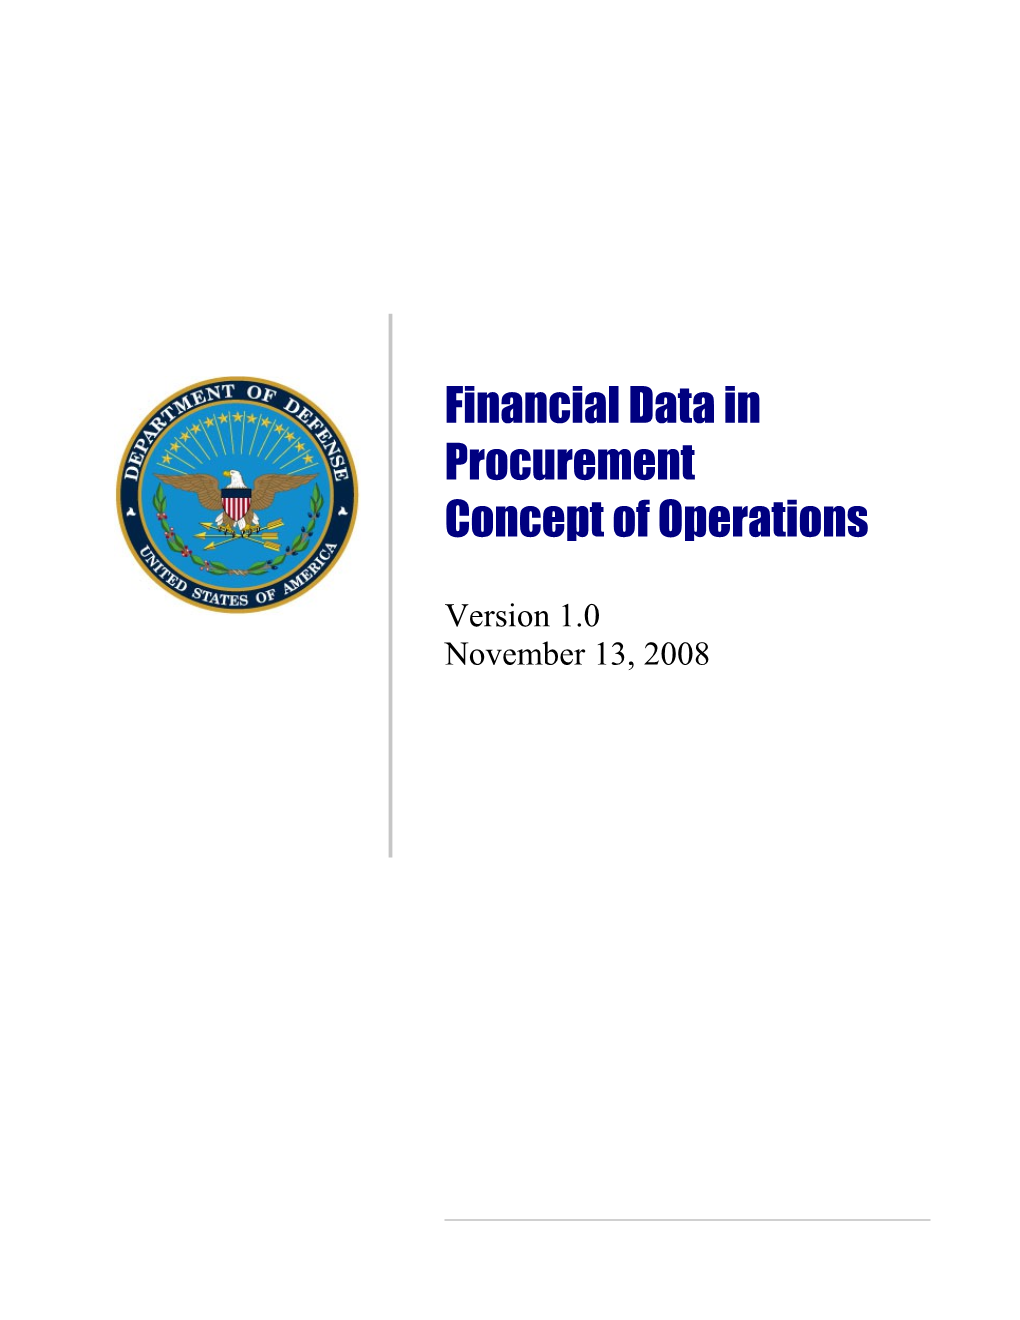 Financial Data in Procurement